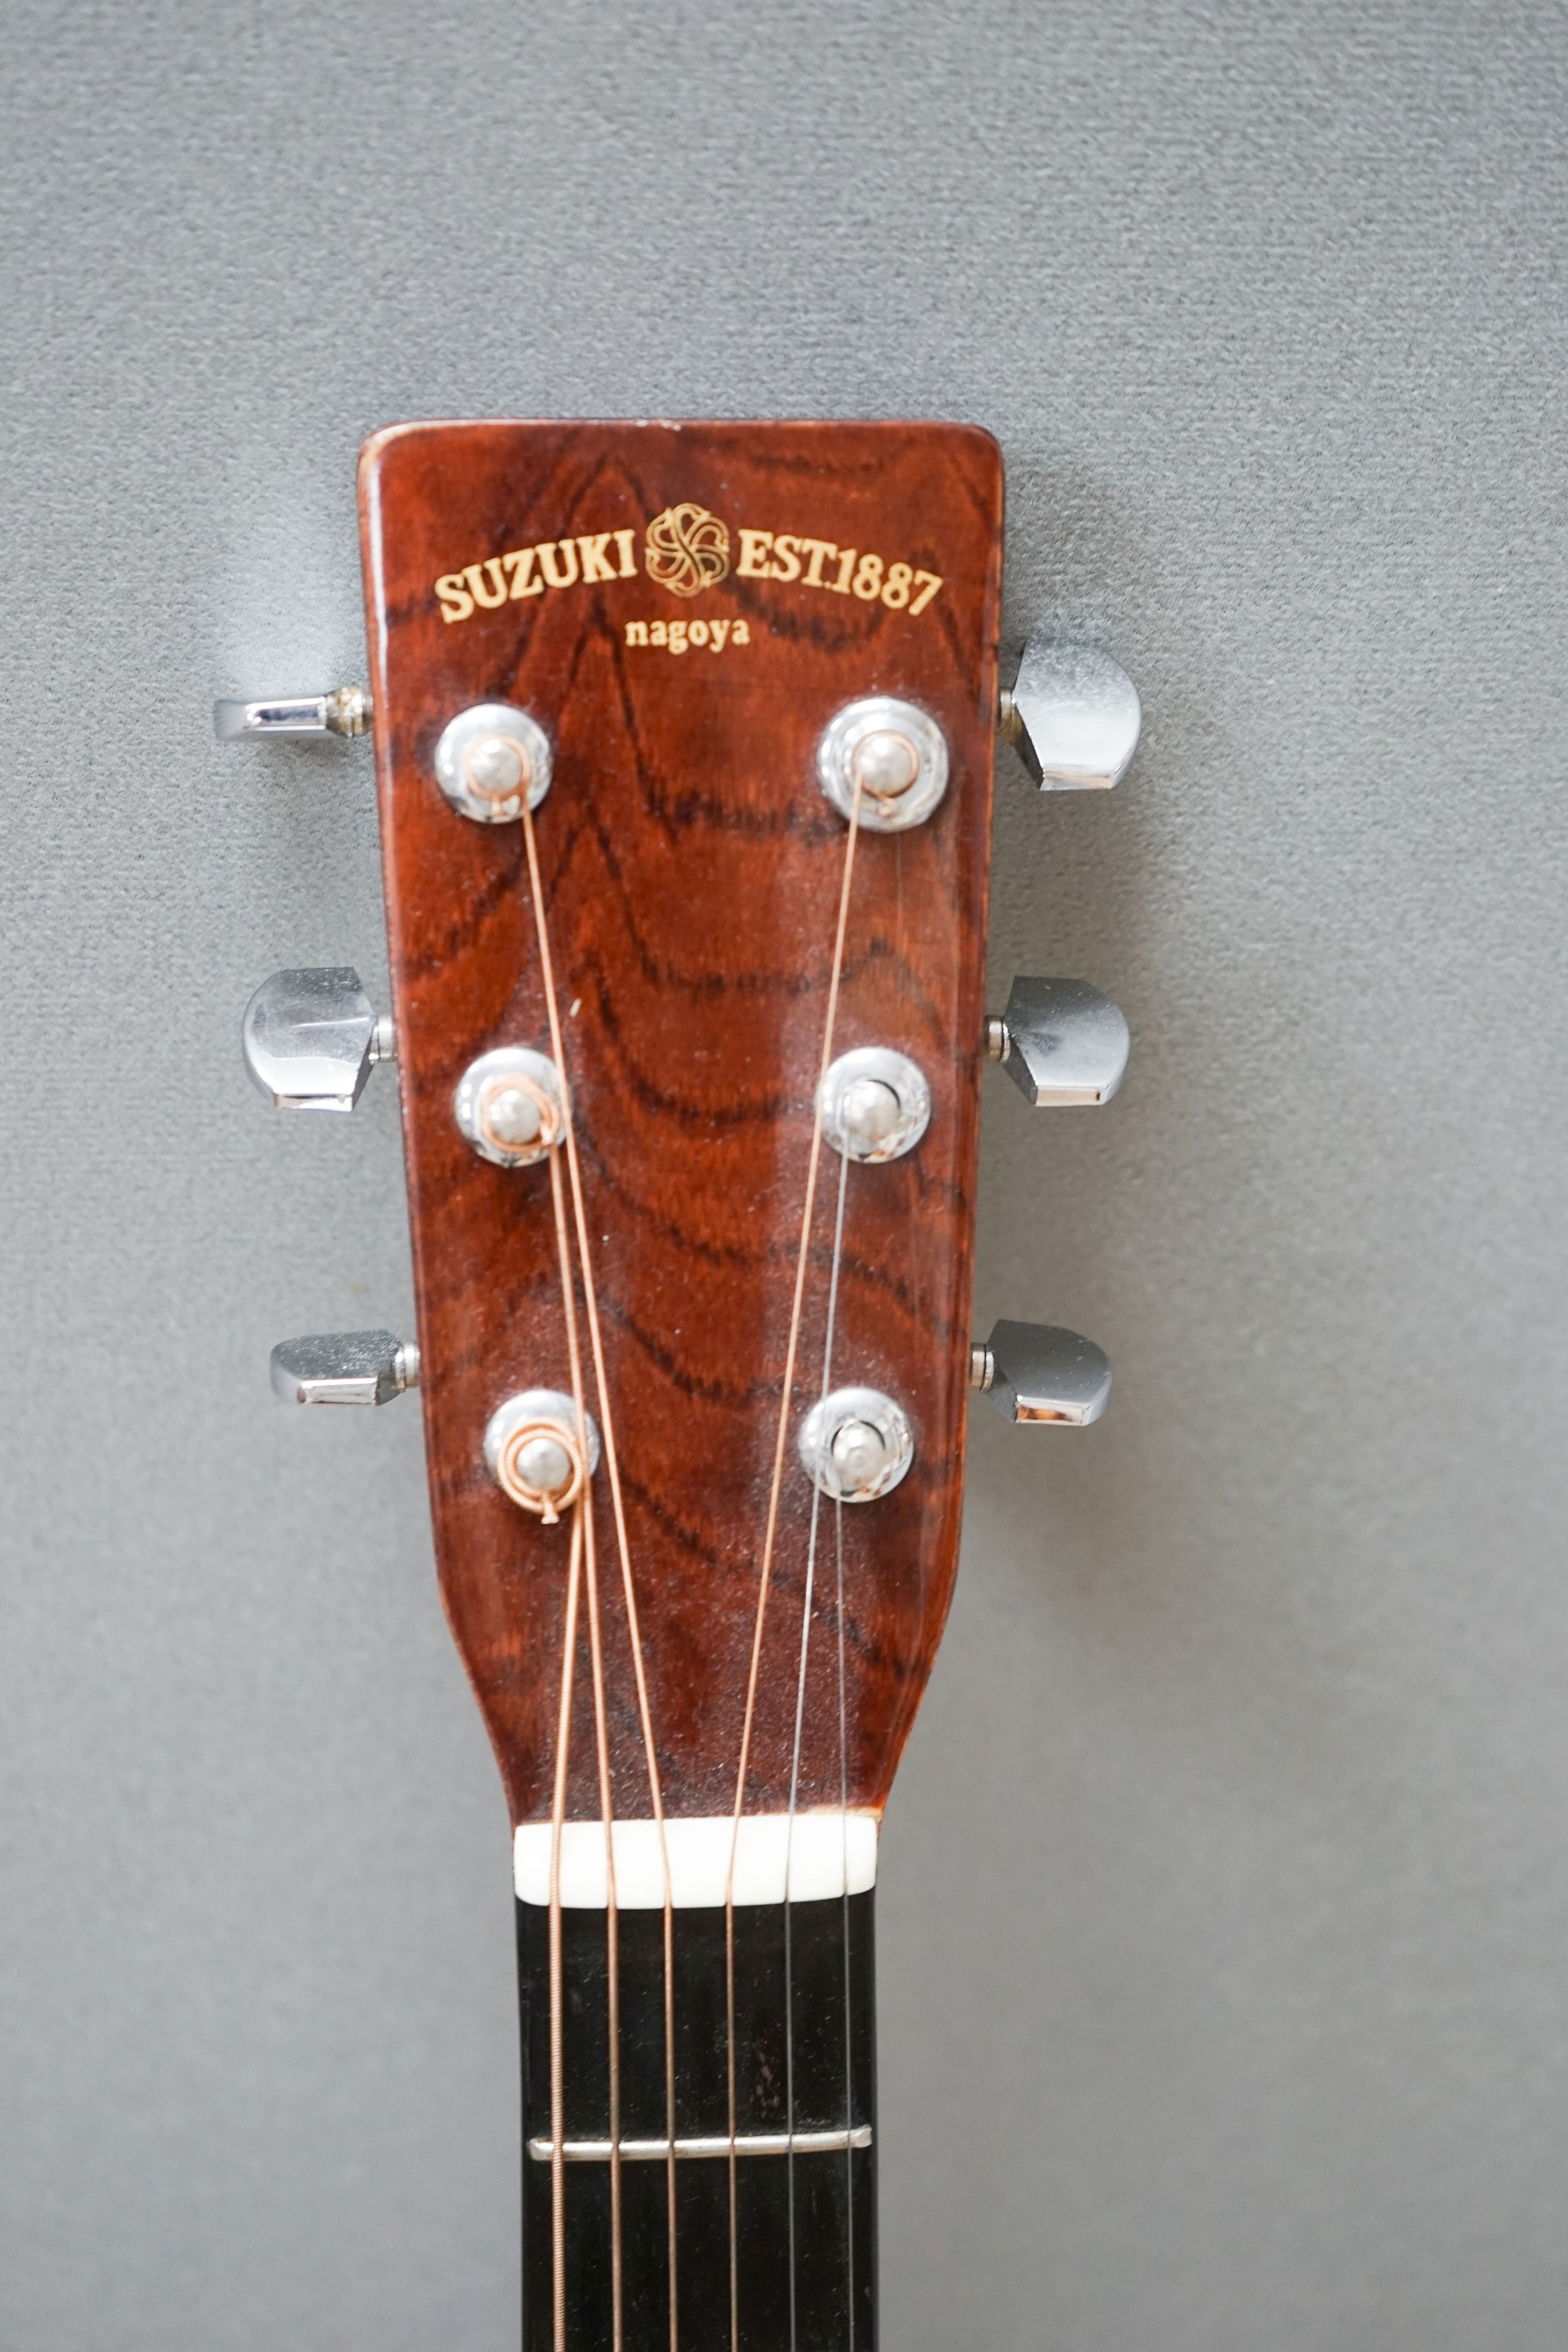 A Suzuki steel string acoustic guitar model???